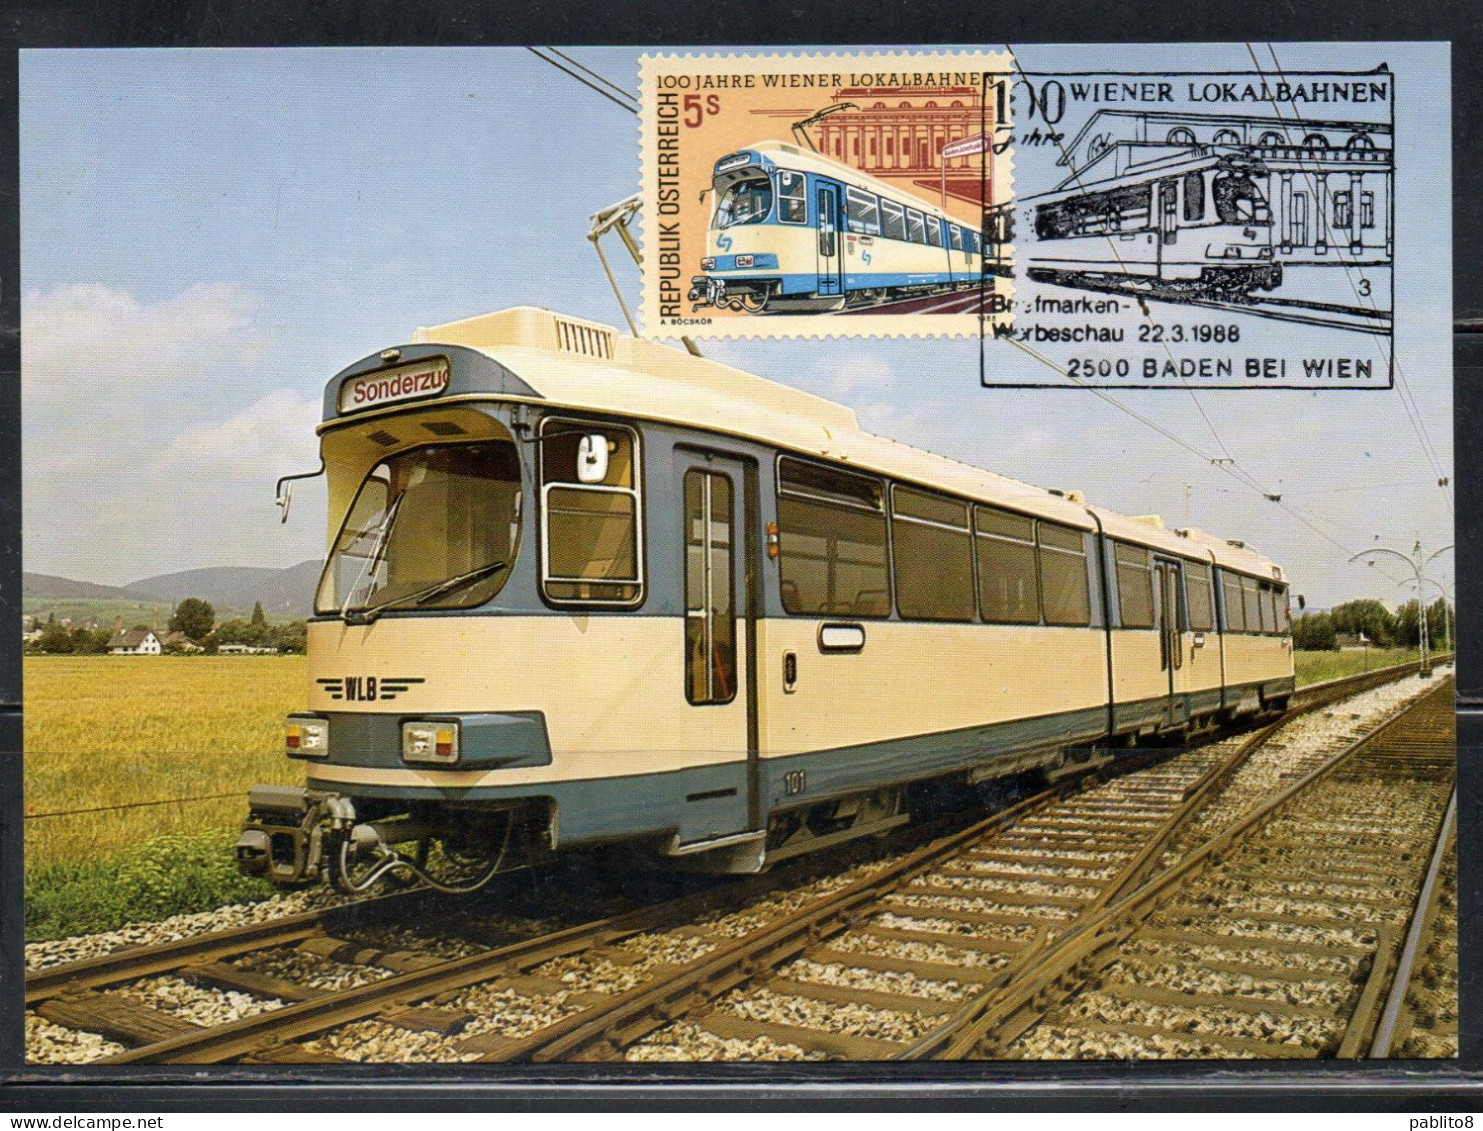 AUSTRIA ÖSTERREICH 1988 MUHIKREIS RAILWAY CENTENARY ELECTRIC TRAIN JOSEPSPLATZ VIENNA LOCAL  5s CARTE MAXIMUM MAXI CARD - Cartes-Maximum (CM)